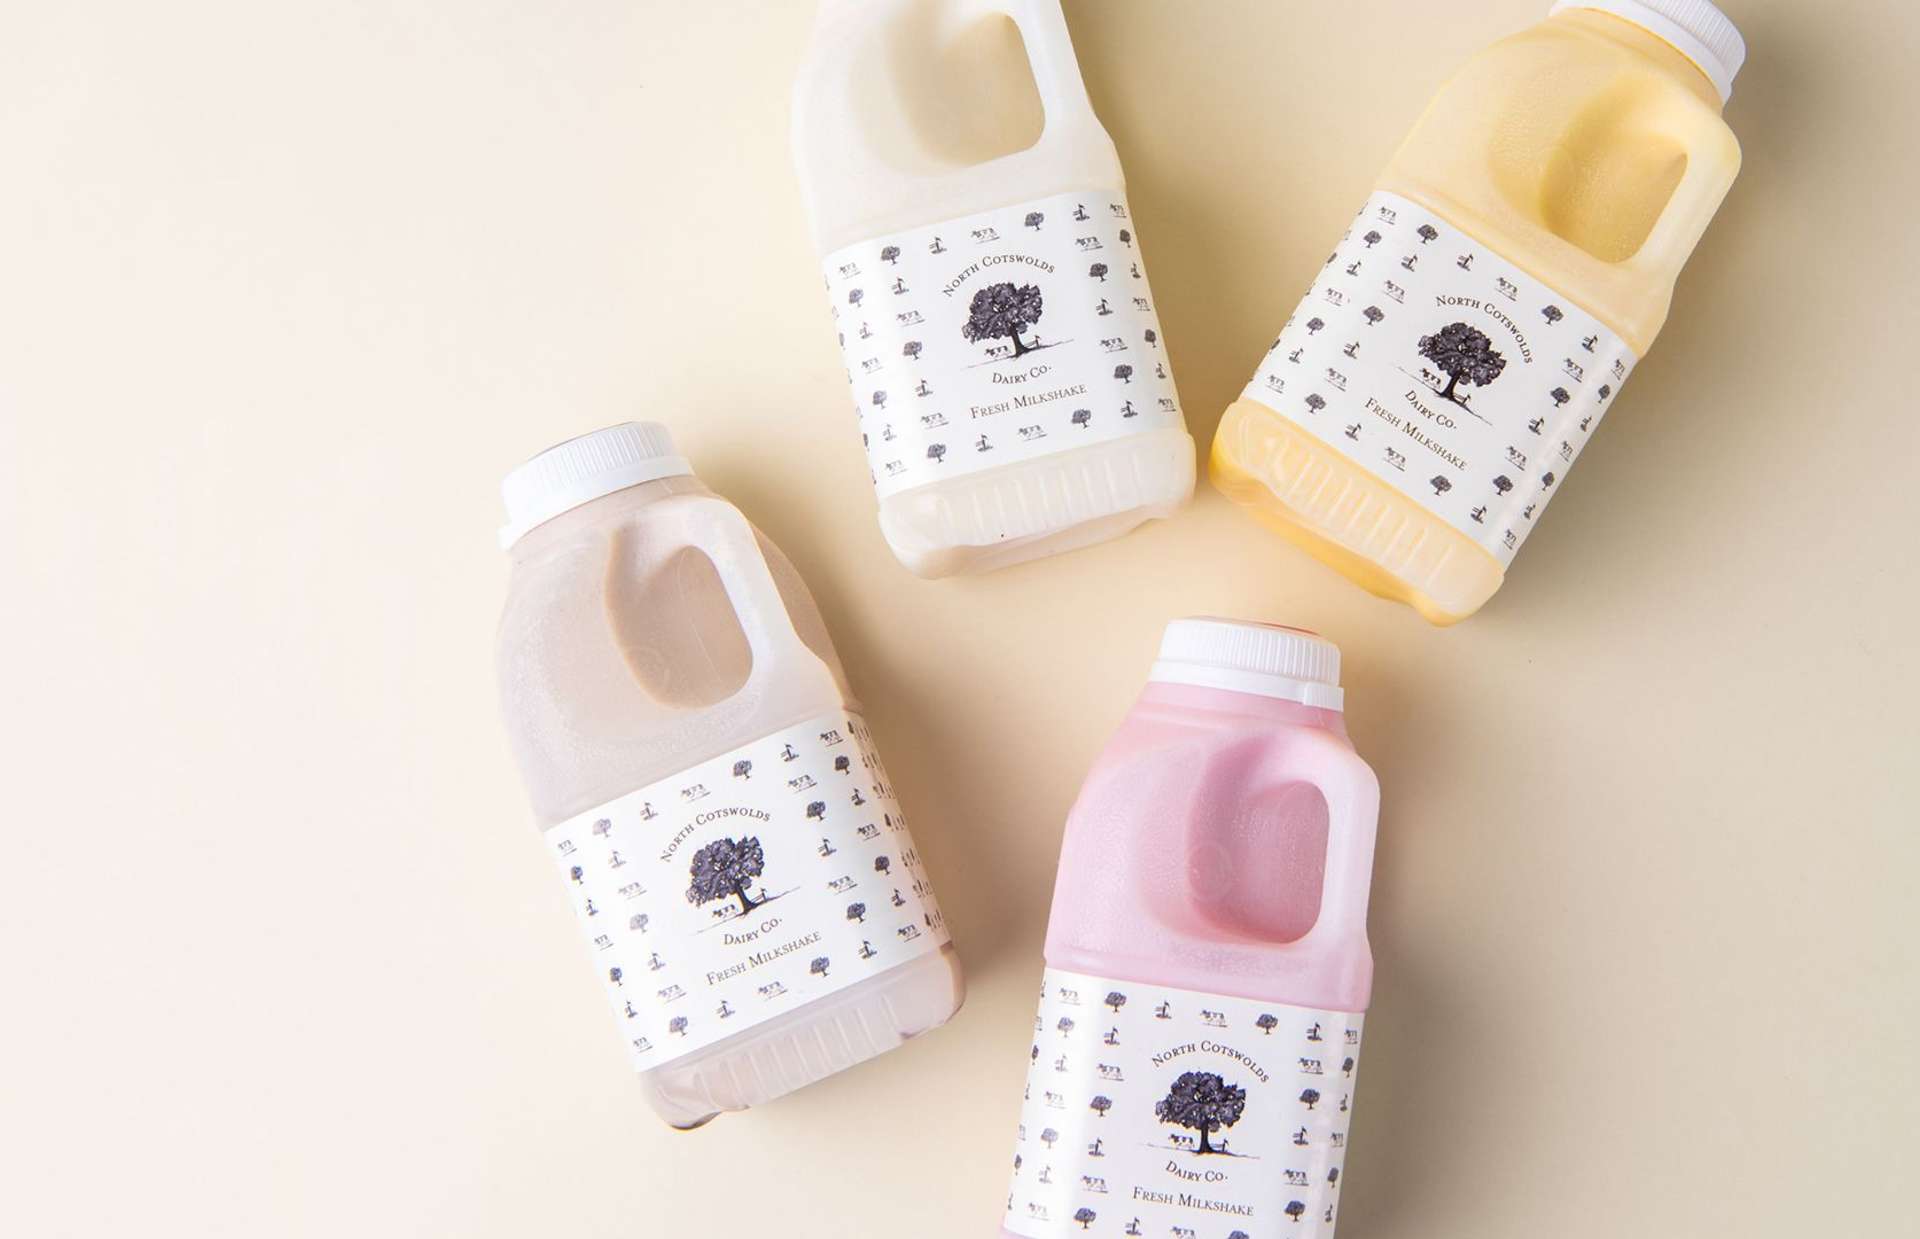 Cotswold Dairy flavoured milk bottles